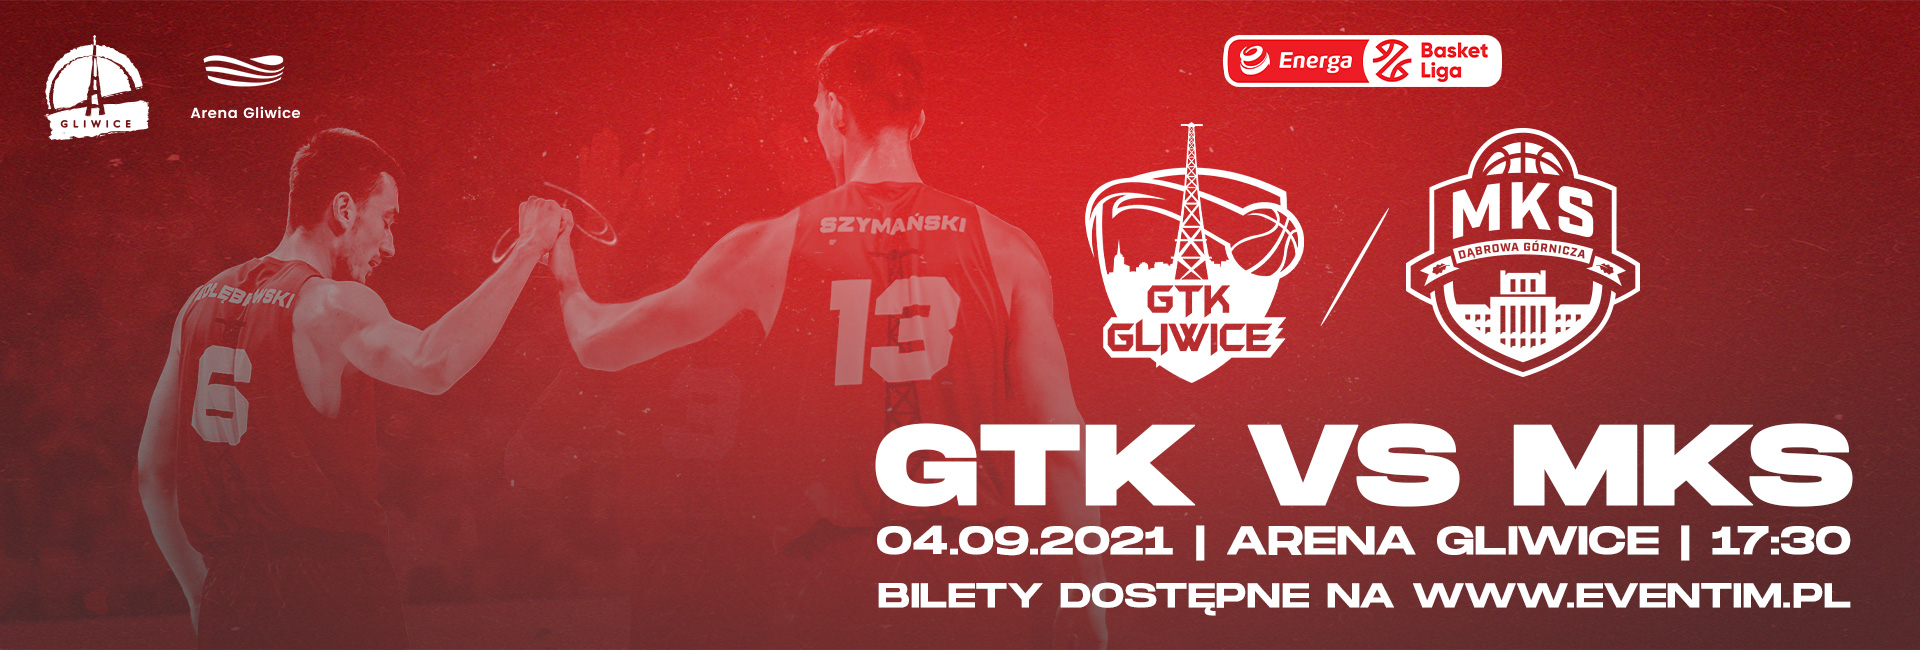 GTK Gliwice vs MKS Dąbrowa Górnicza